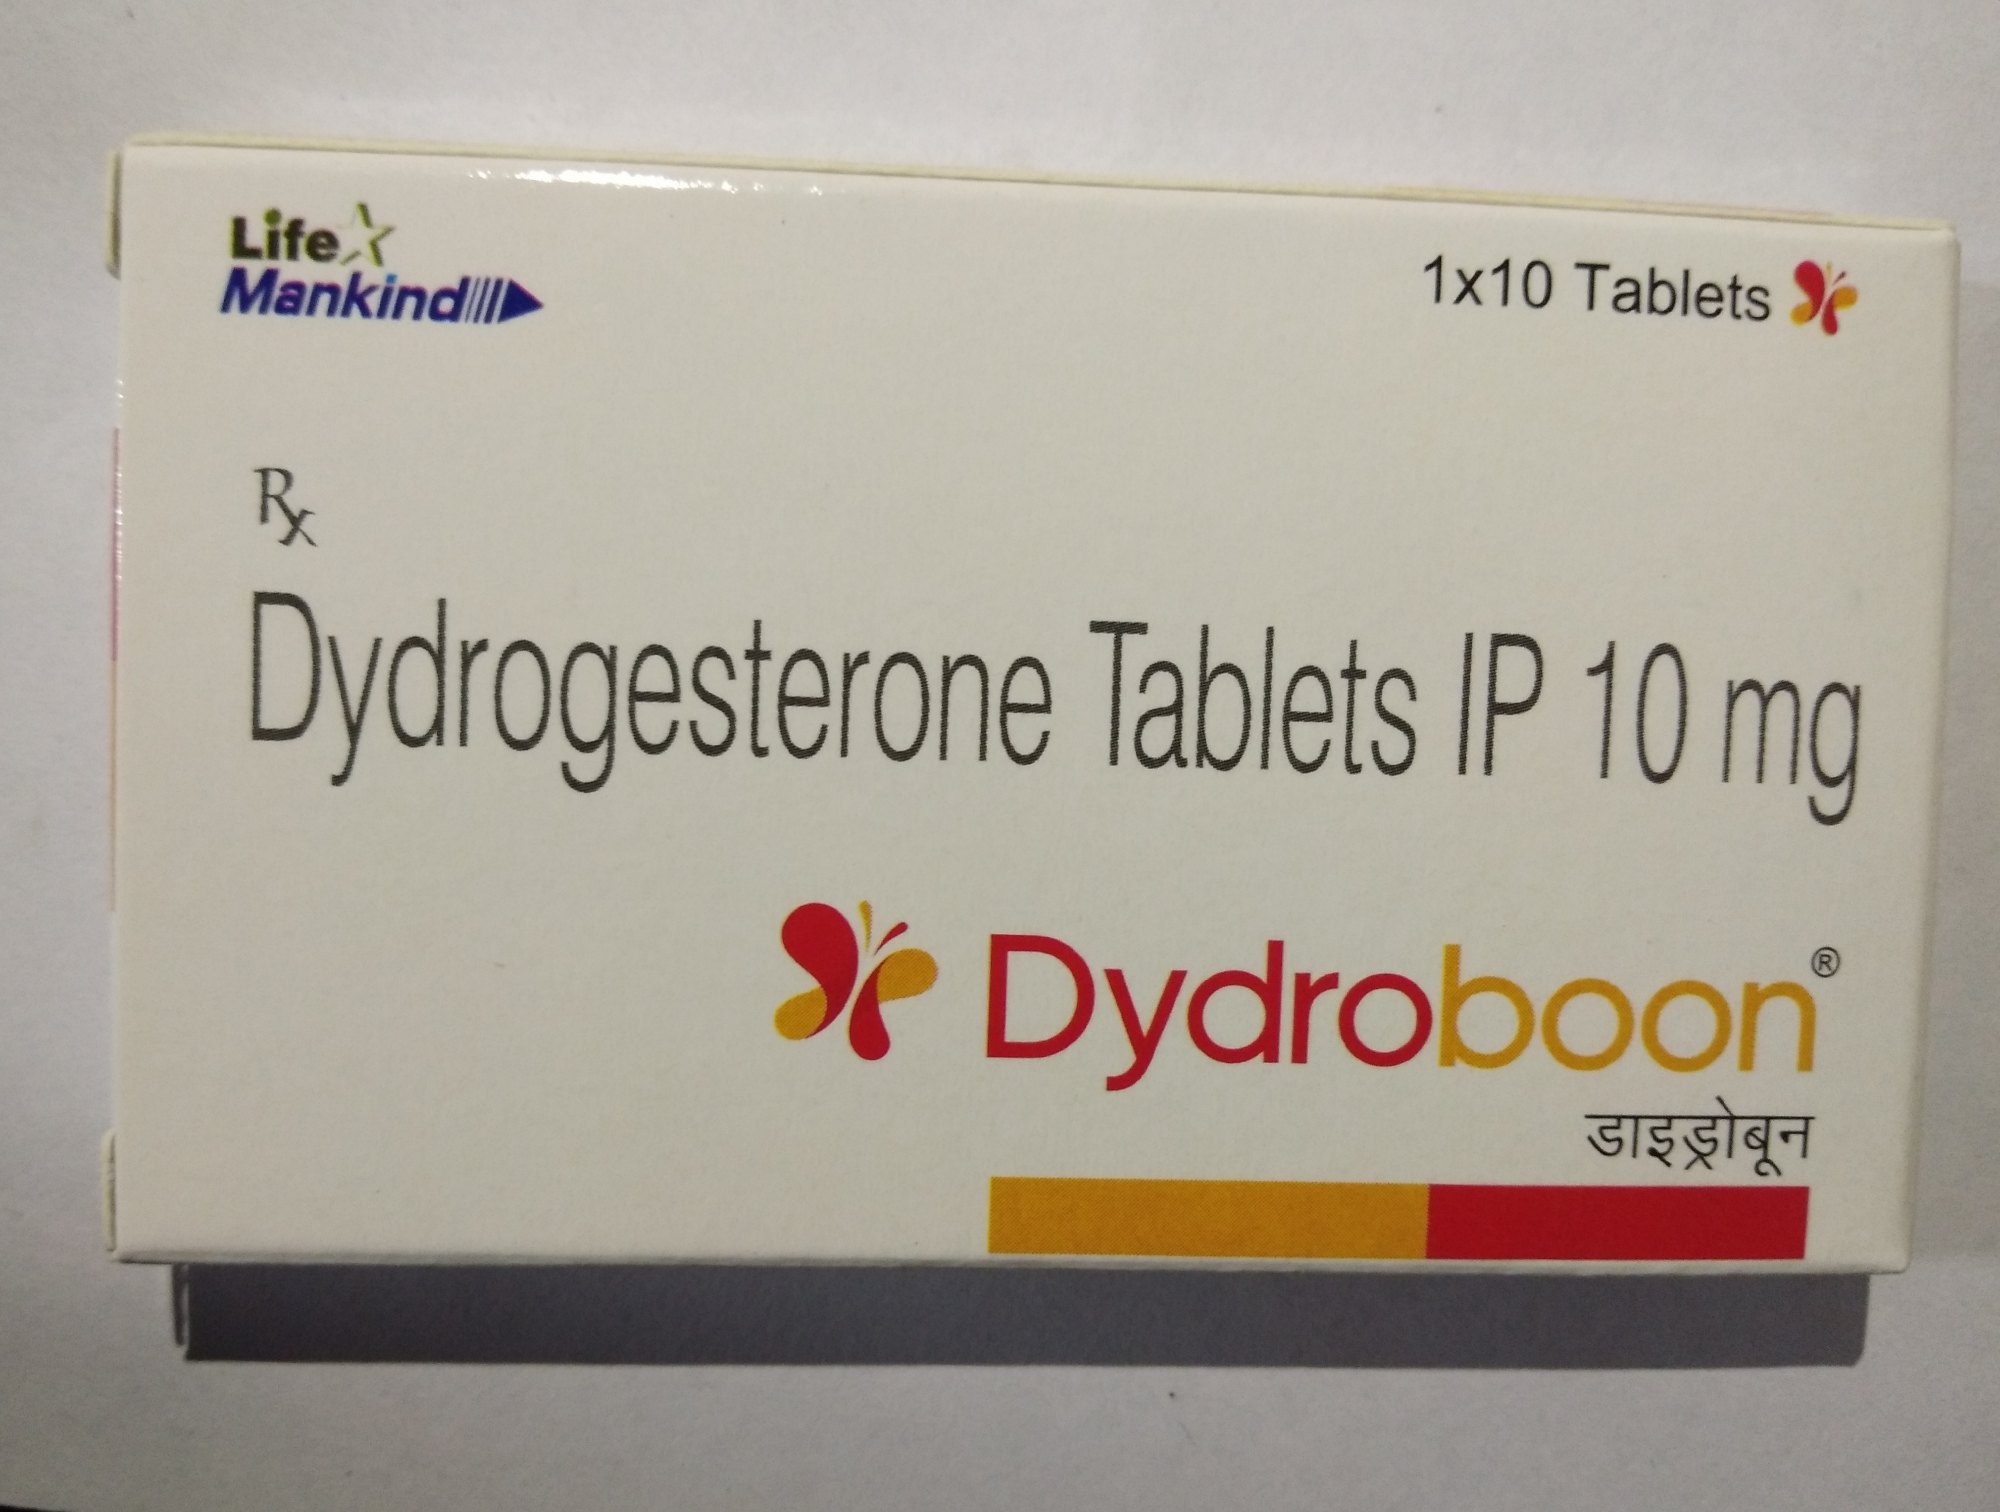 Dydrogesterone Tablet